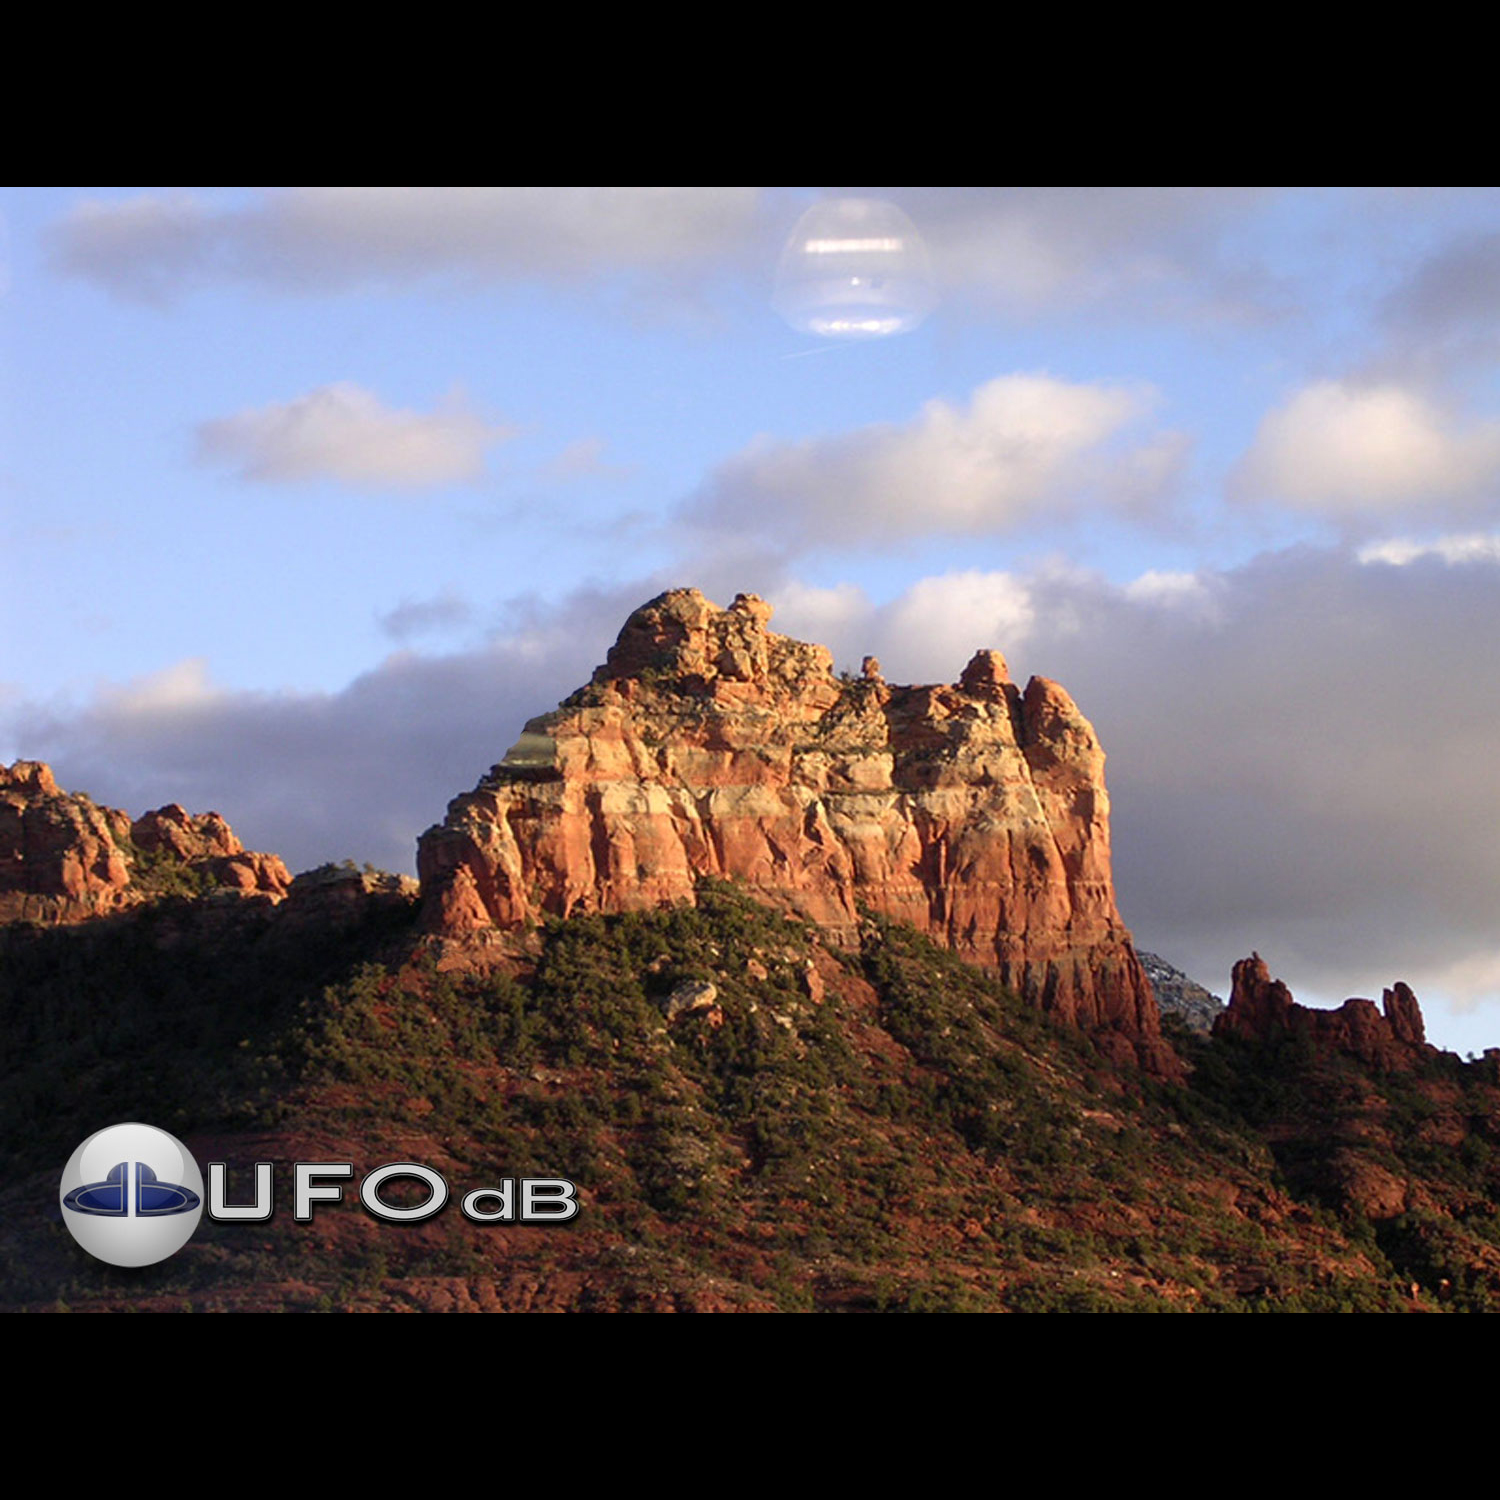 UFO Flying over mountain in the desert of Arizona near Sedona UFO Picture #14-1